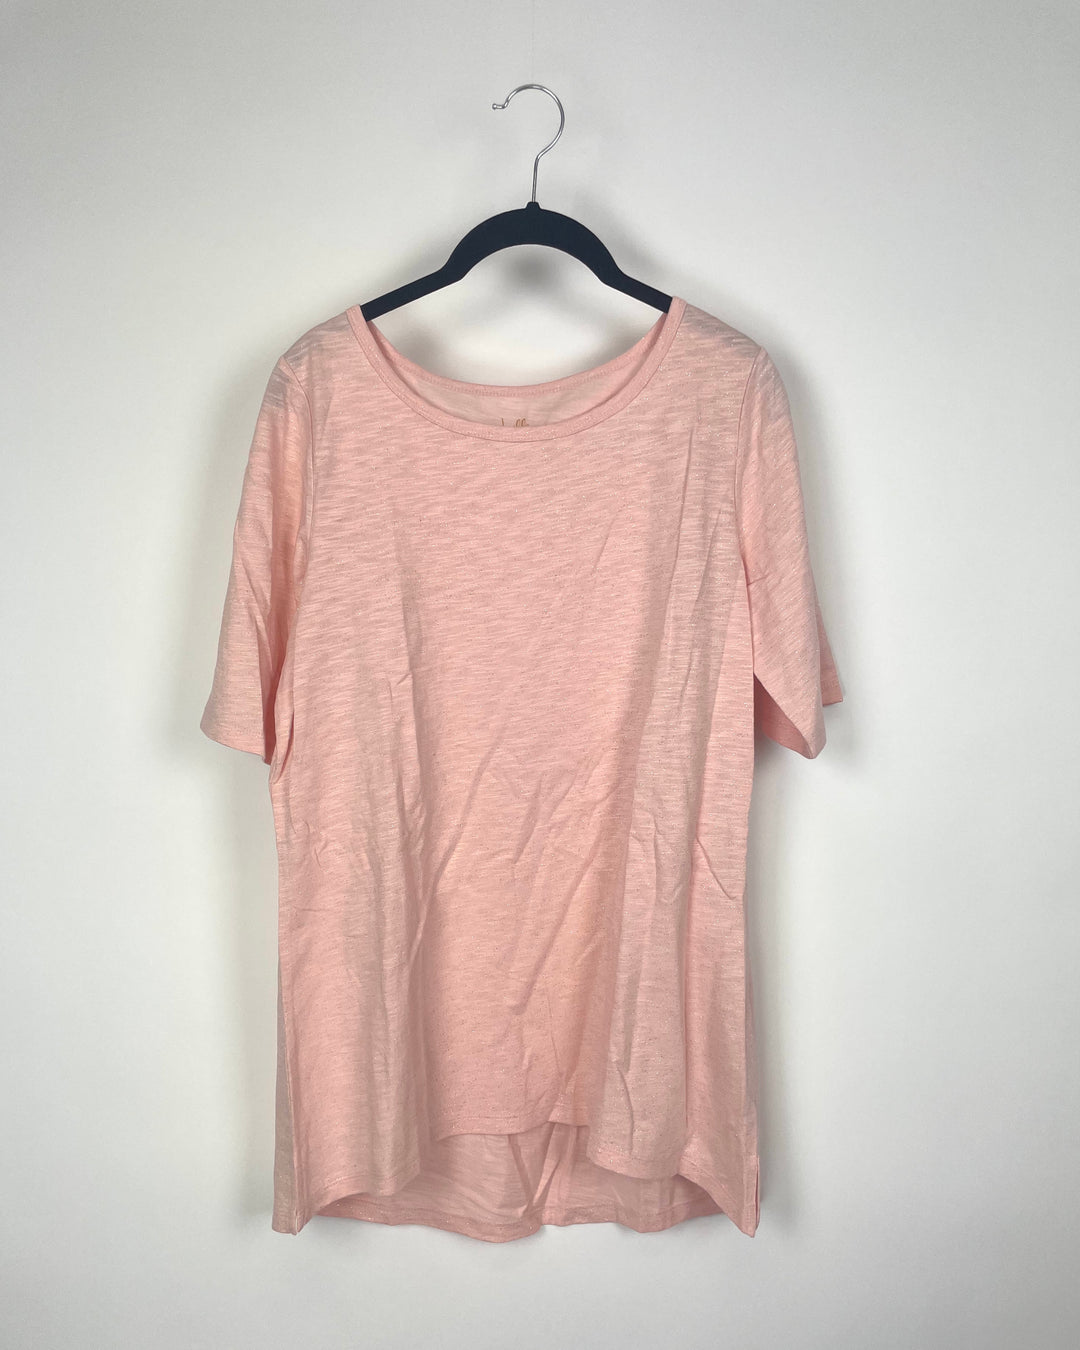 Light Pink Short Sleeve Sparkled T-Shirt- Small/Medium